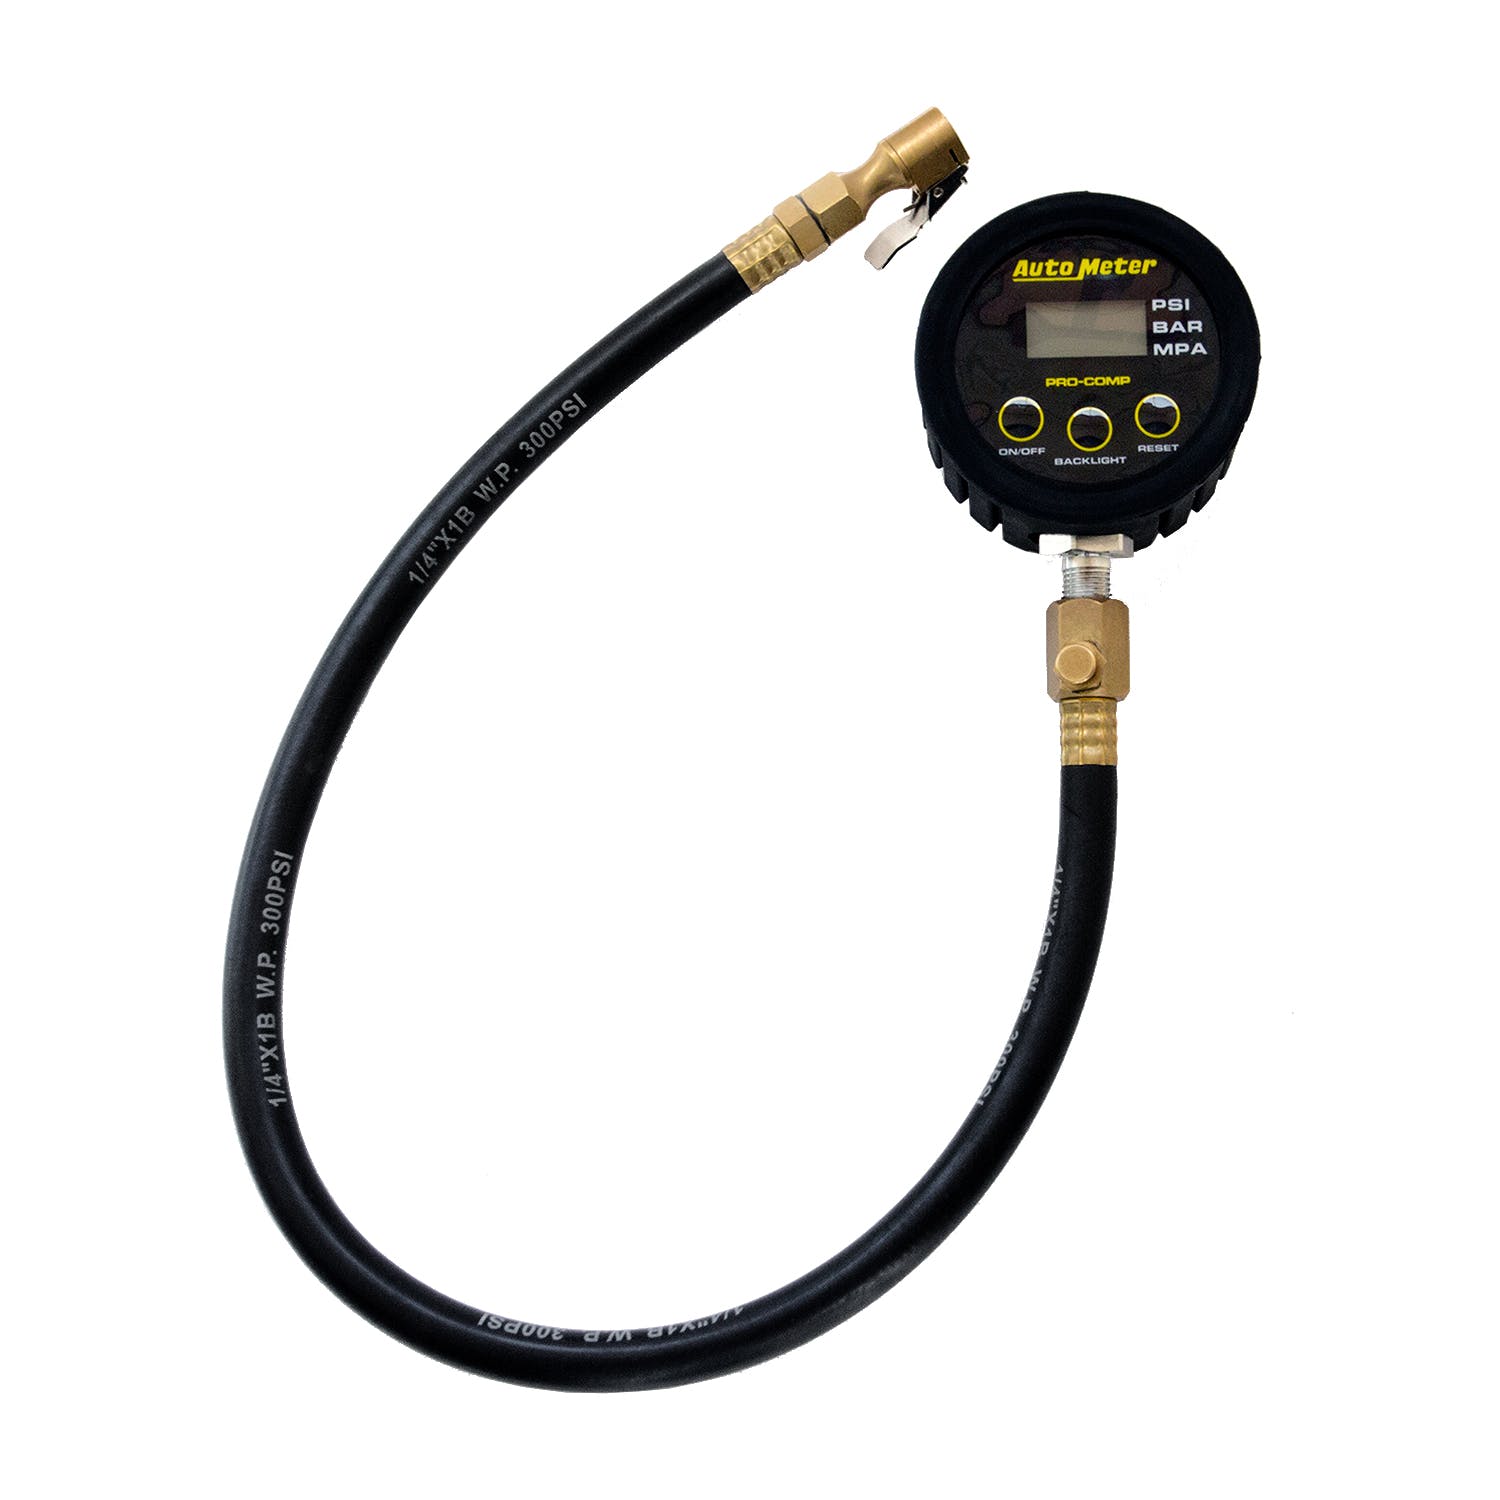 AutoMeter Products 2163 Pro Comp Precision Digital Tire Pressure